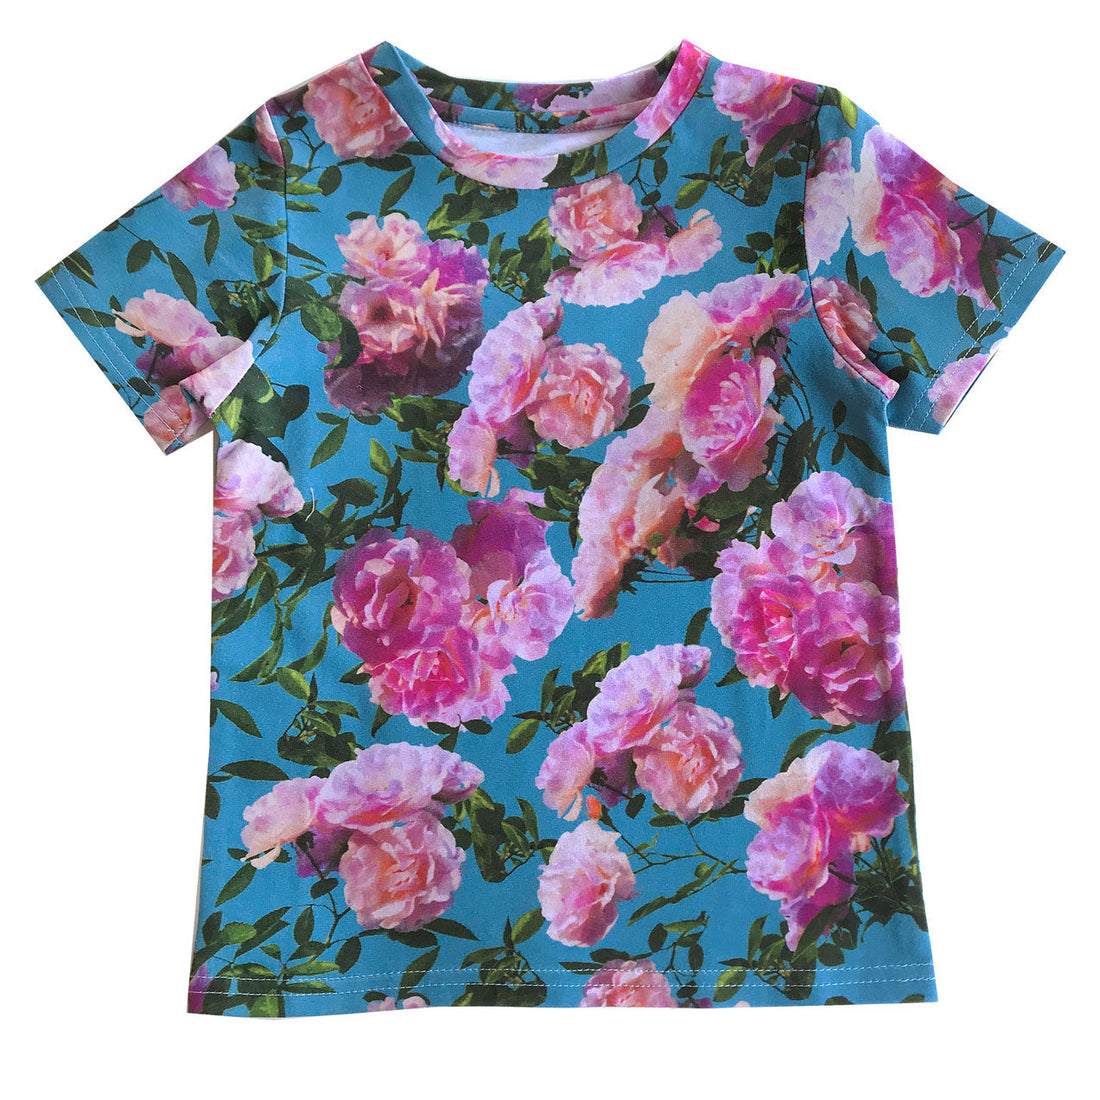 Romey Loves Lulu tees Romey Loves Lulu Pink Blue Flowers T-shirt